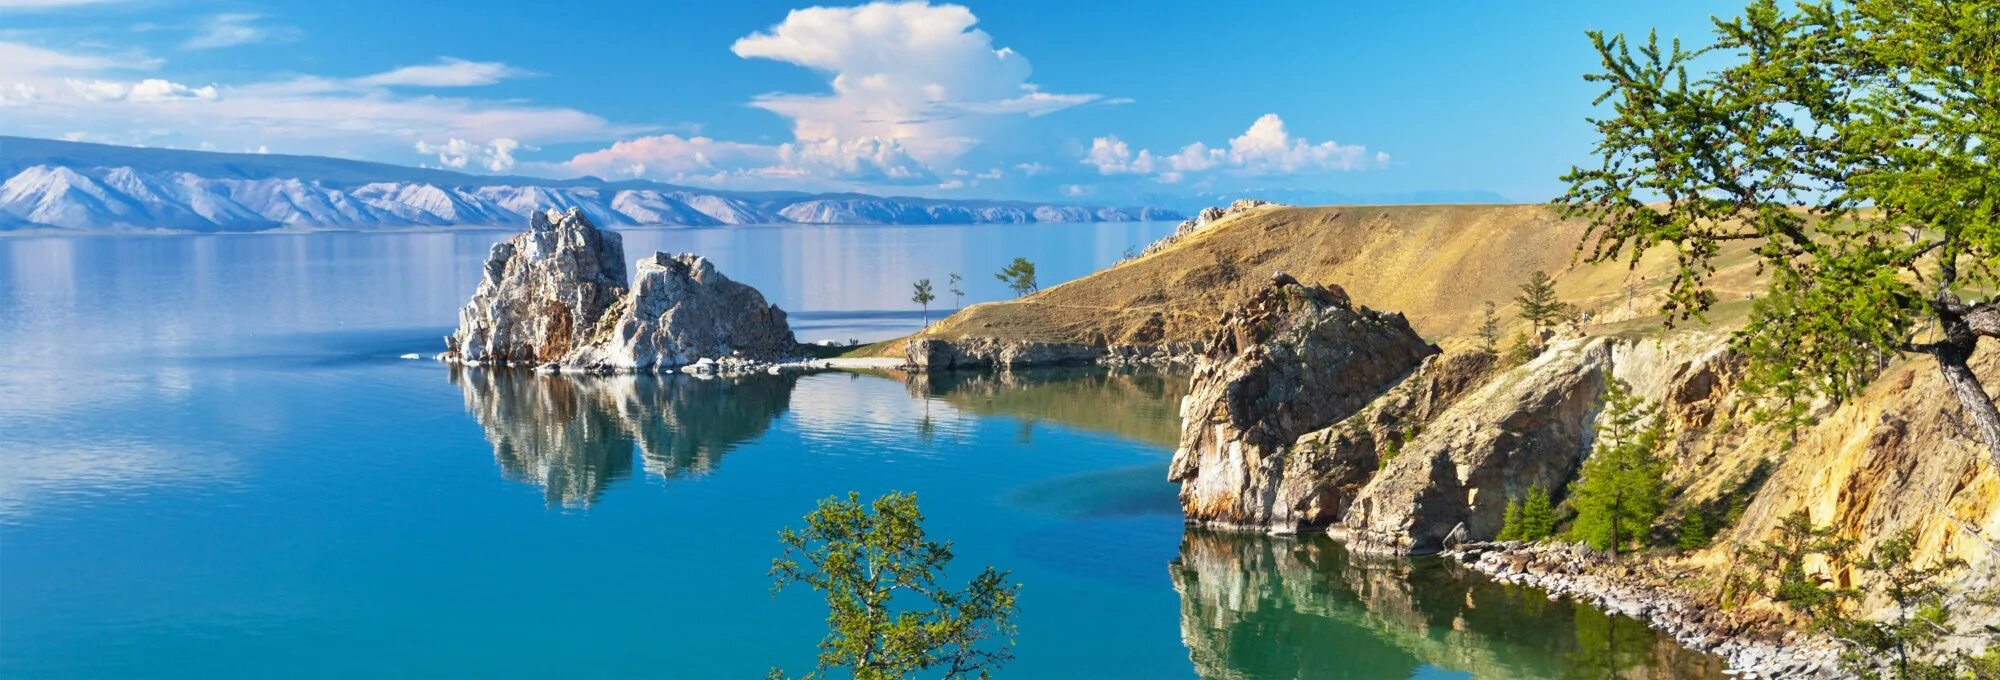 Ольхон панорама. Озеро Байкал панорама. Озеро байайкал панорама. Байкал Ольхон панорама. Самые крупные озера сибири